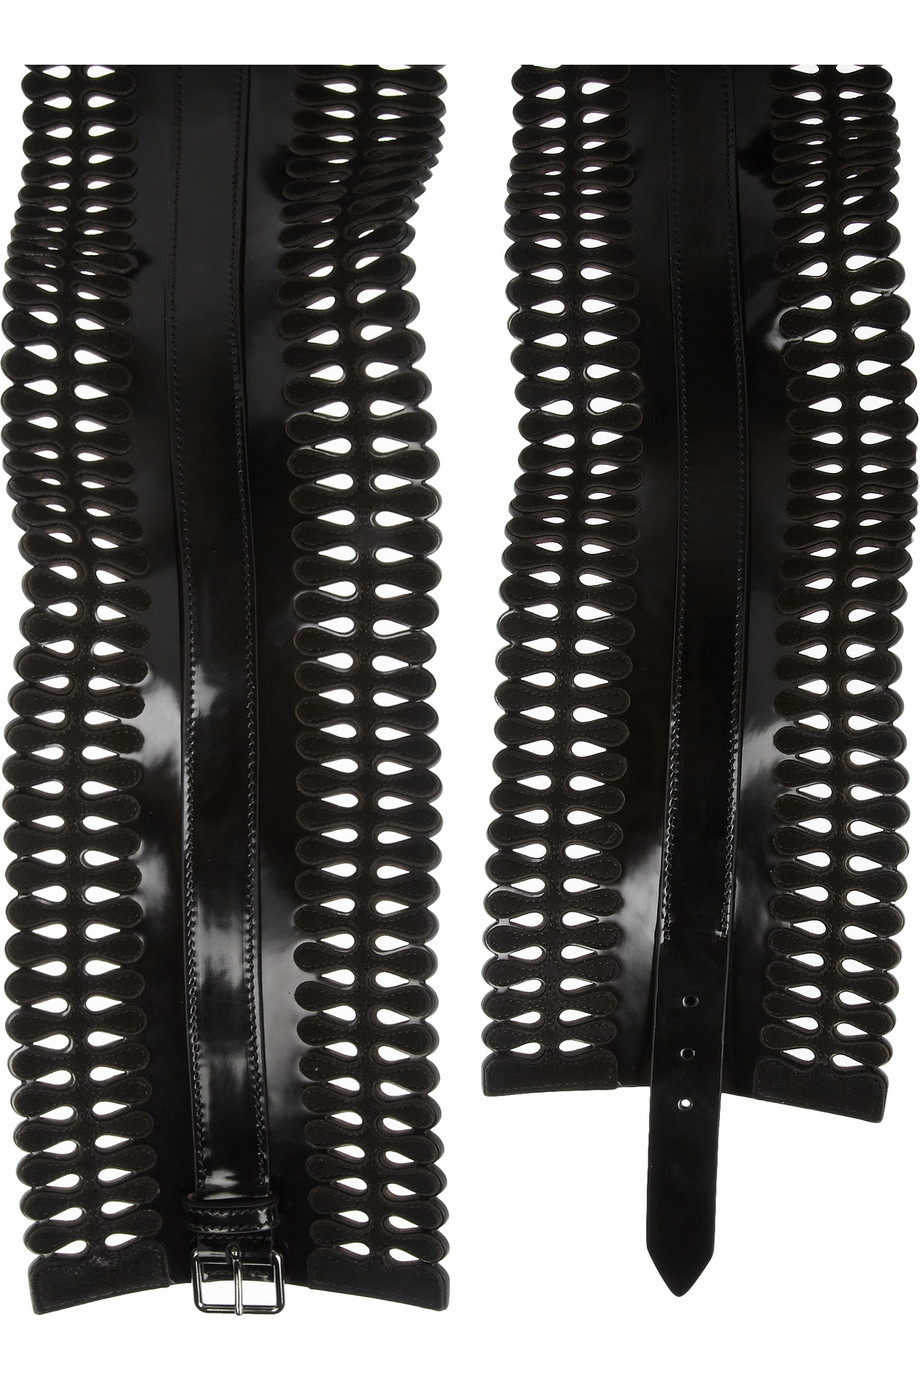 Alaïa Laser-Cut Leather And Suede Corset Belt in Black - Lyst